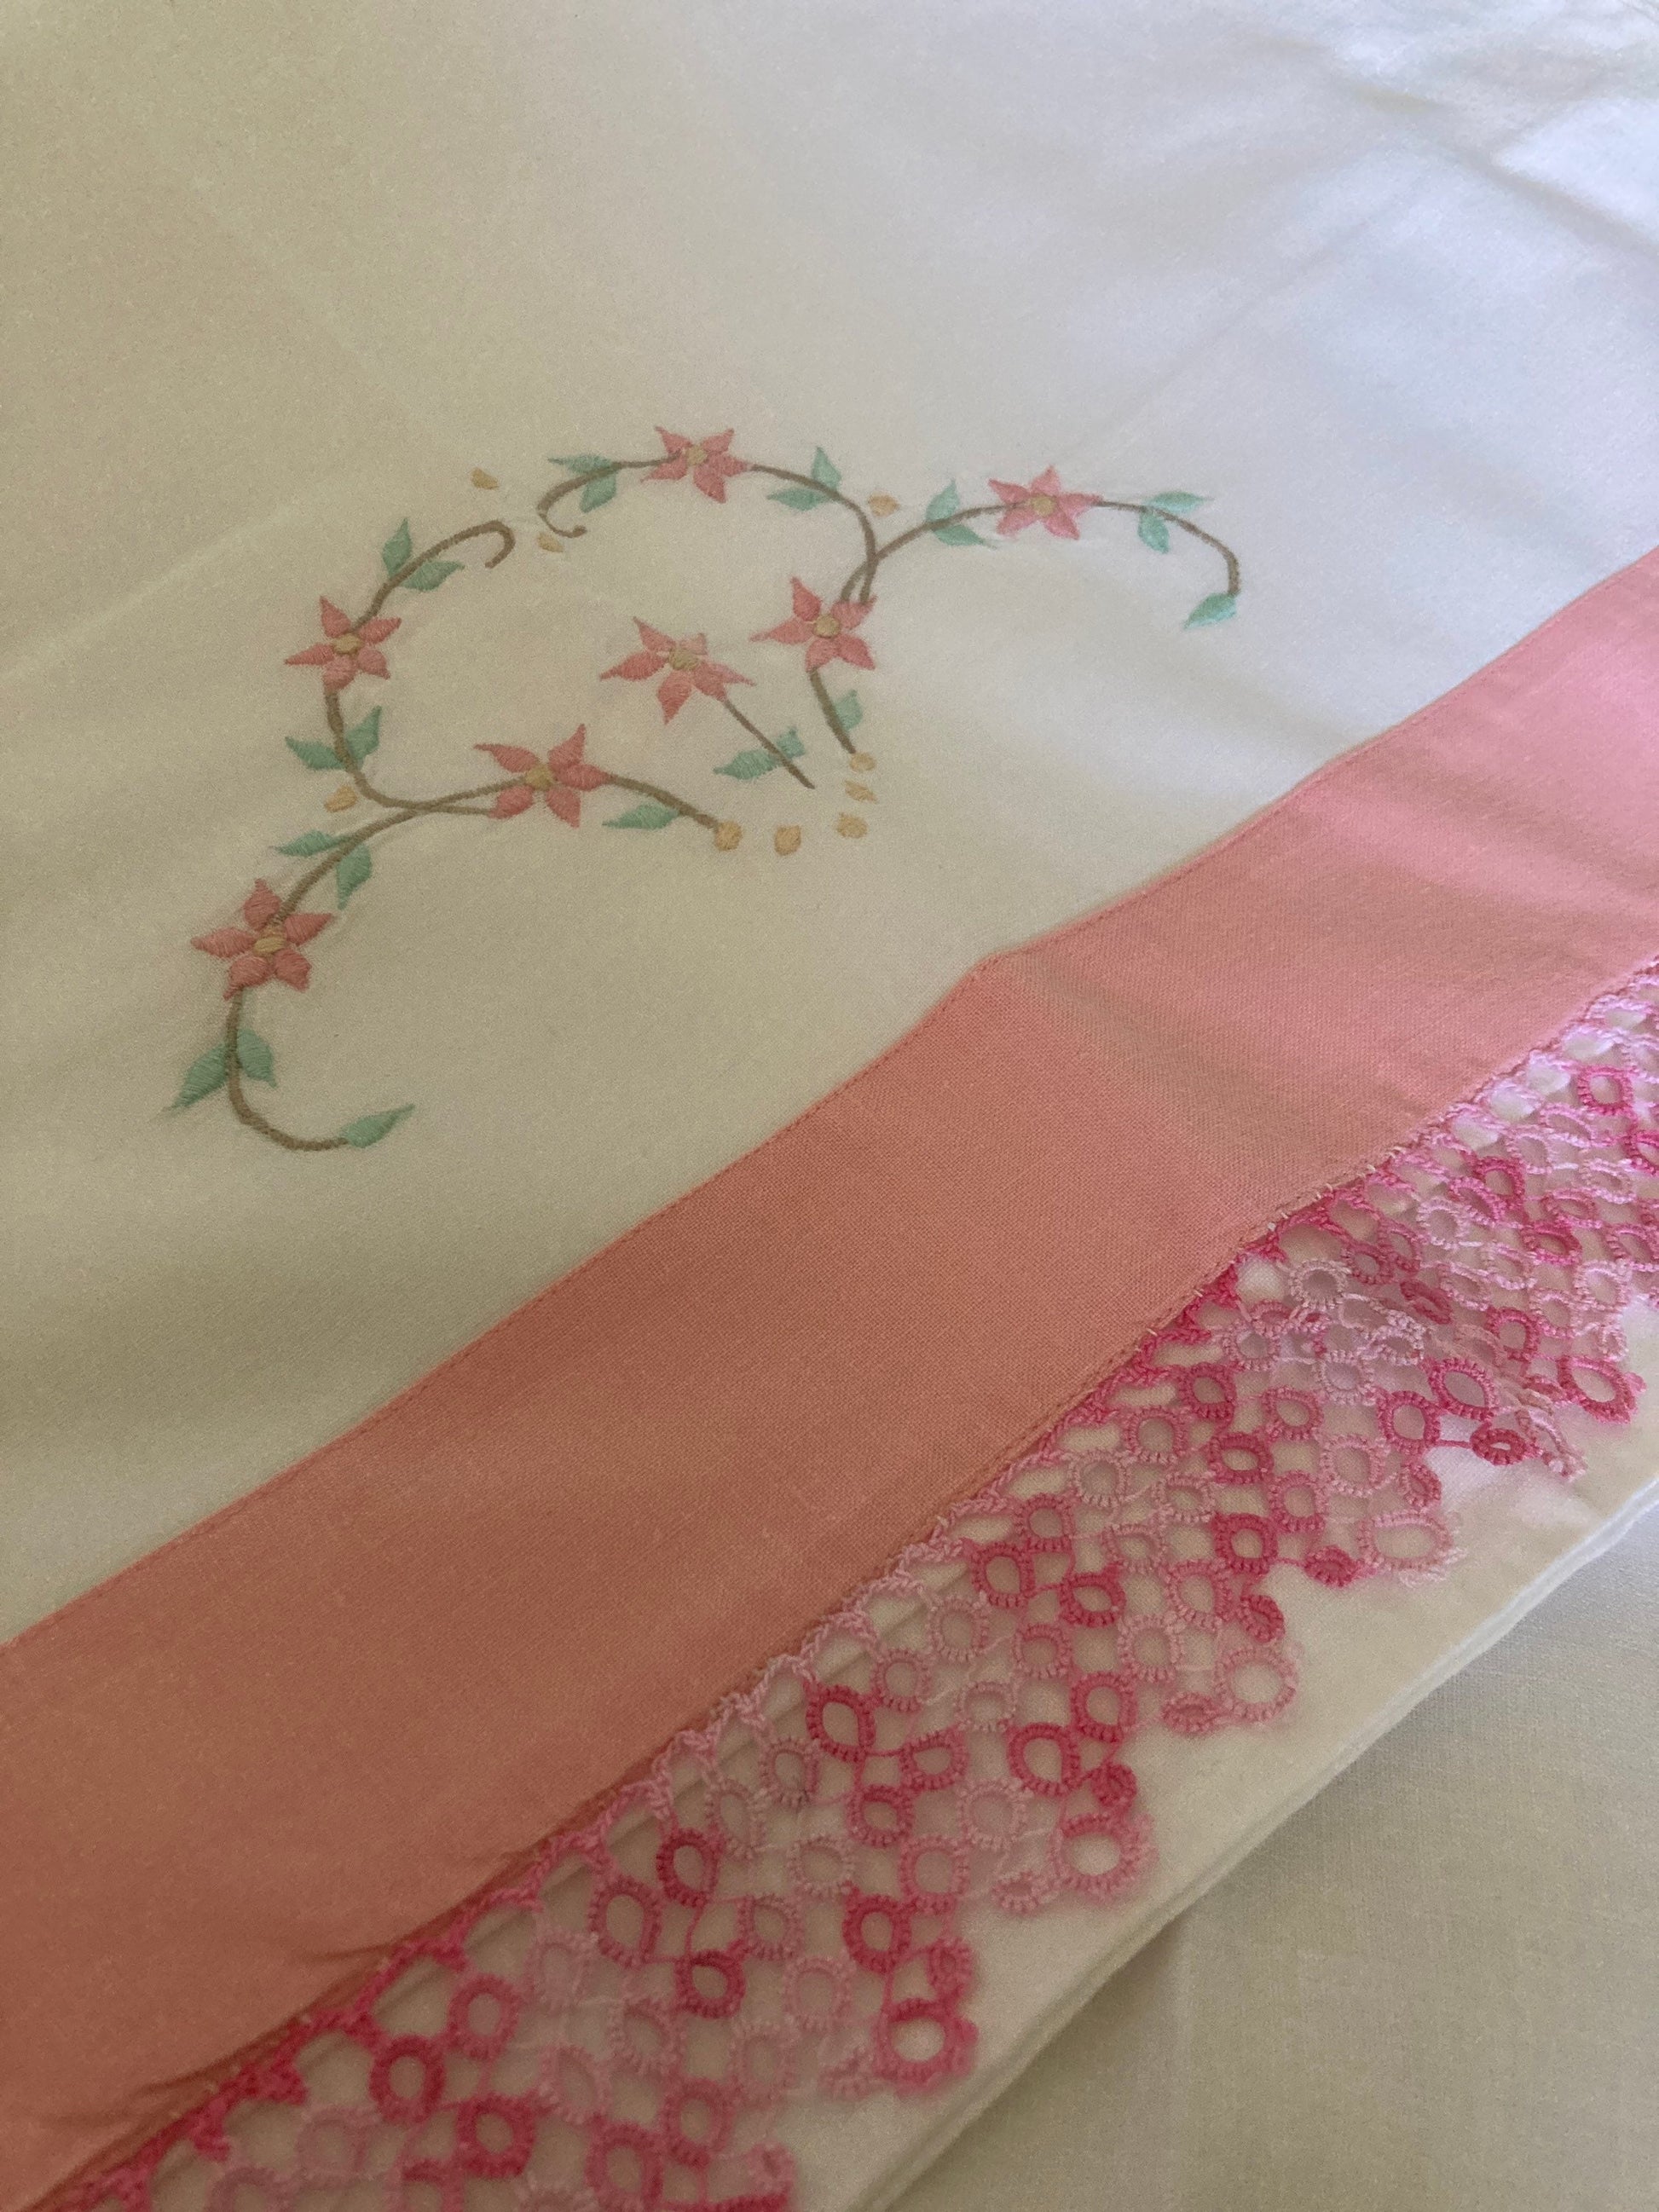 Pair pillowcases bedding white cotton floral flower 28 x 18 white pink crochet edge